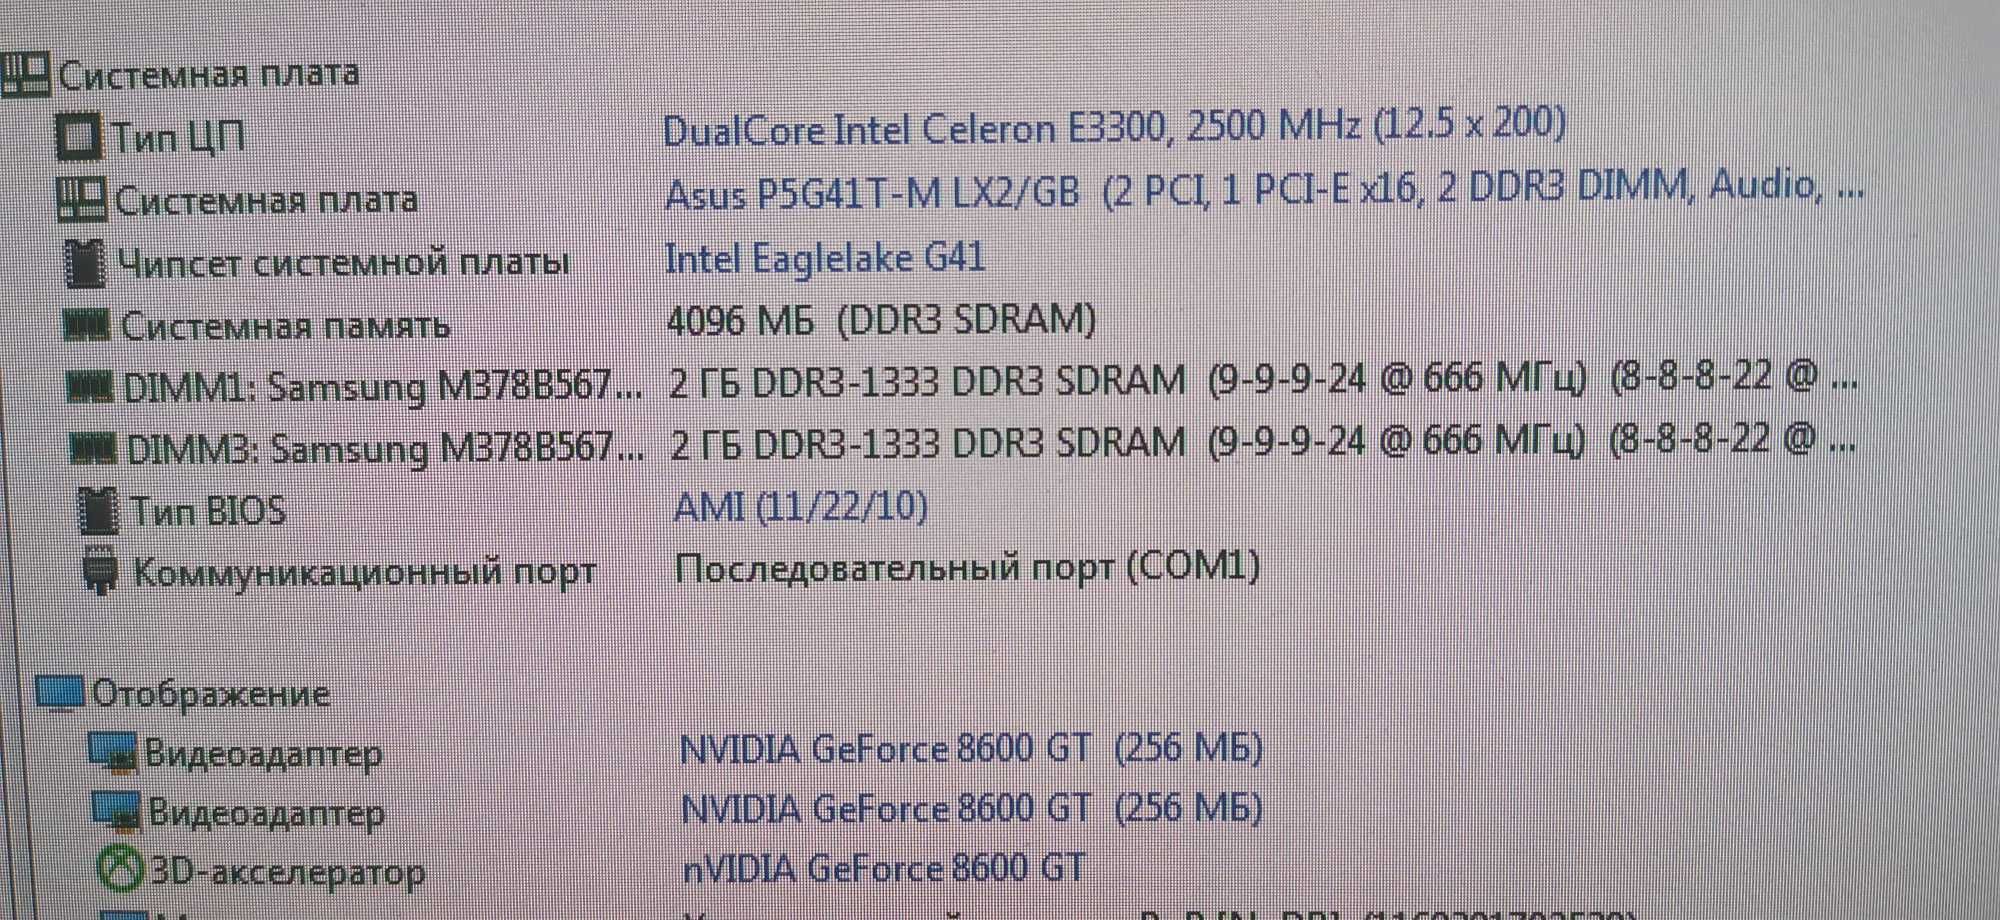 ПК: Asus P5G41T-M, Intel DualCore 2,5GHz, DDR3 Samsung 4Gb, SSD 64Gb